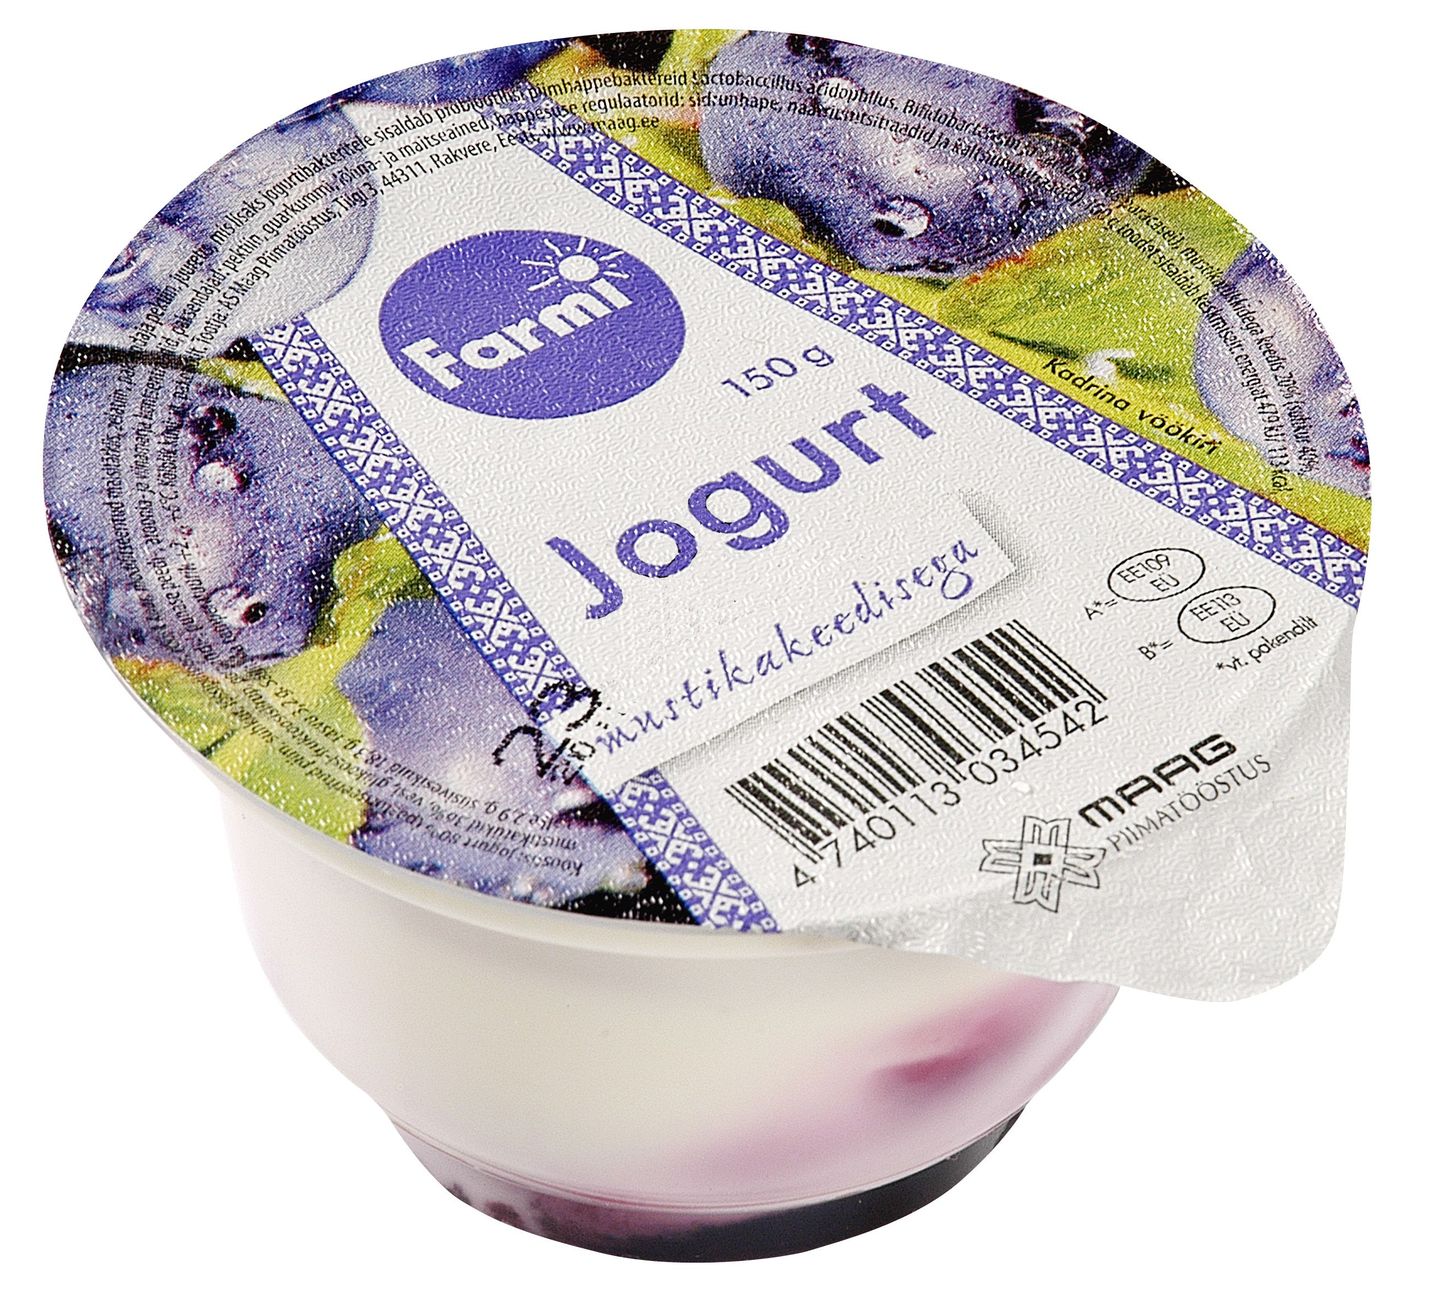 Farmi uus jogurt mustikakeedisega.